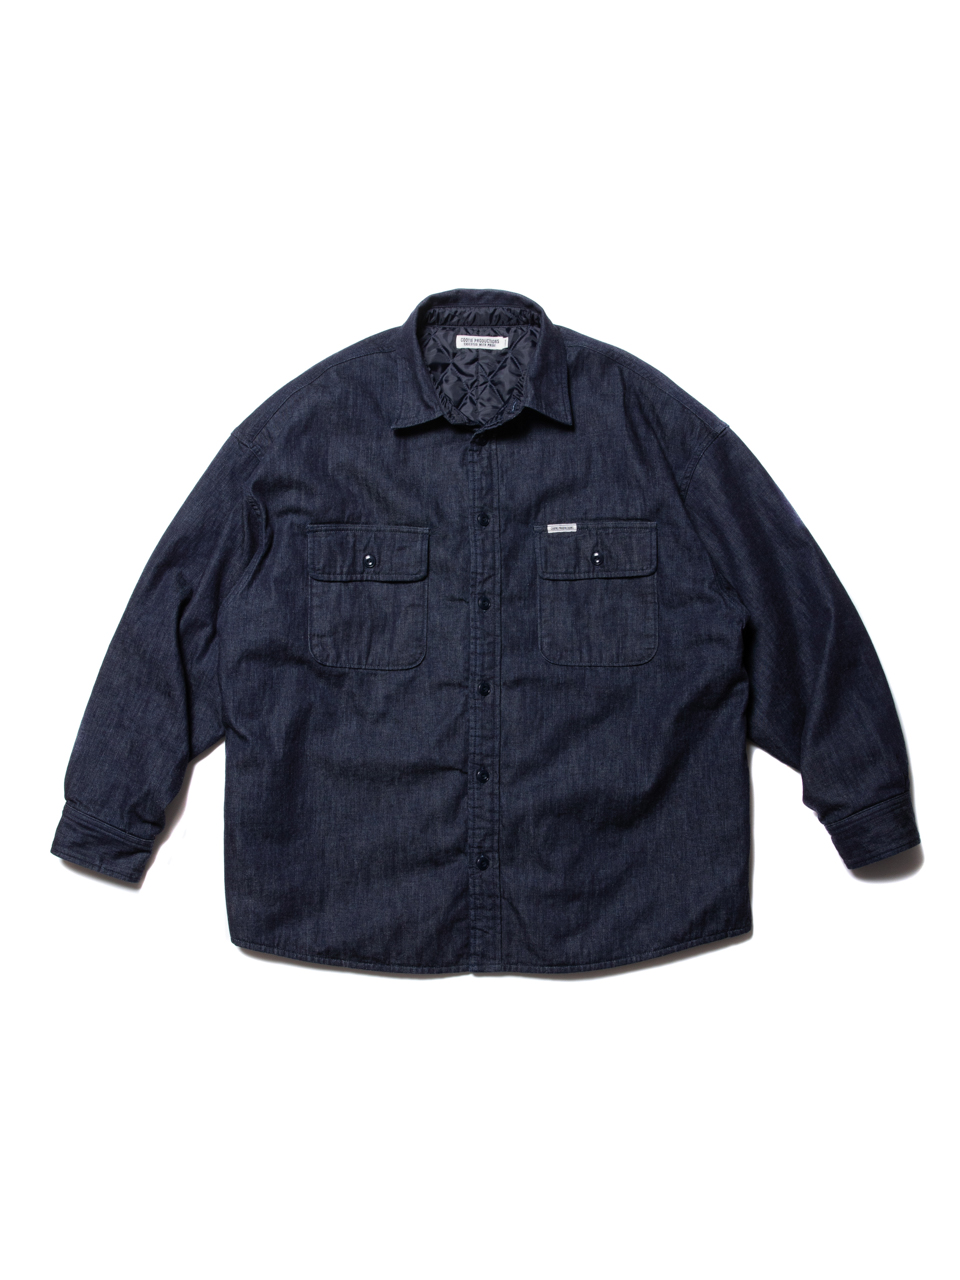 COOTIE Denim Quilting Shirt Jacket-定価-